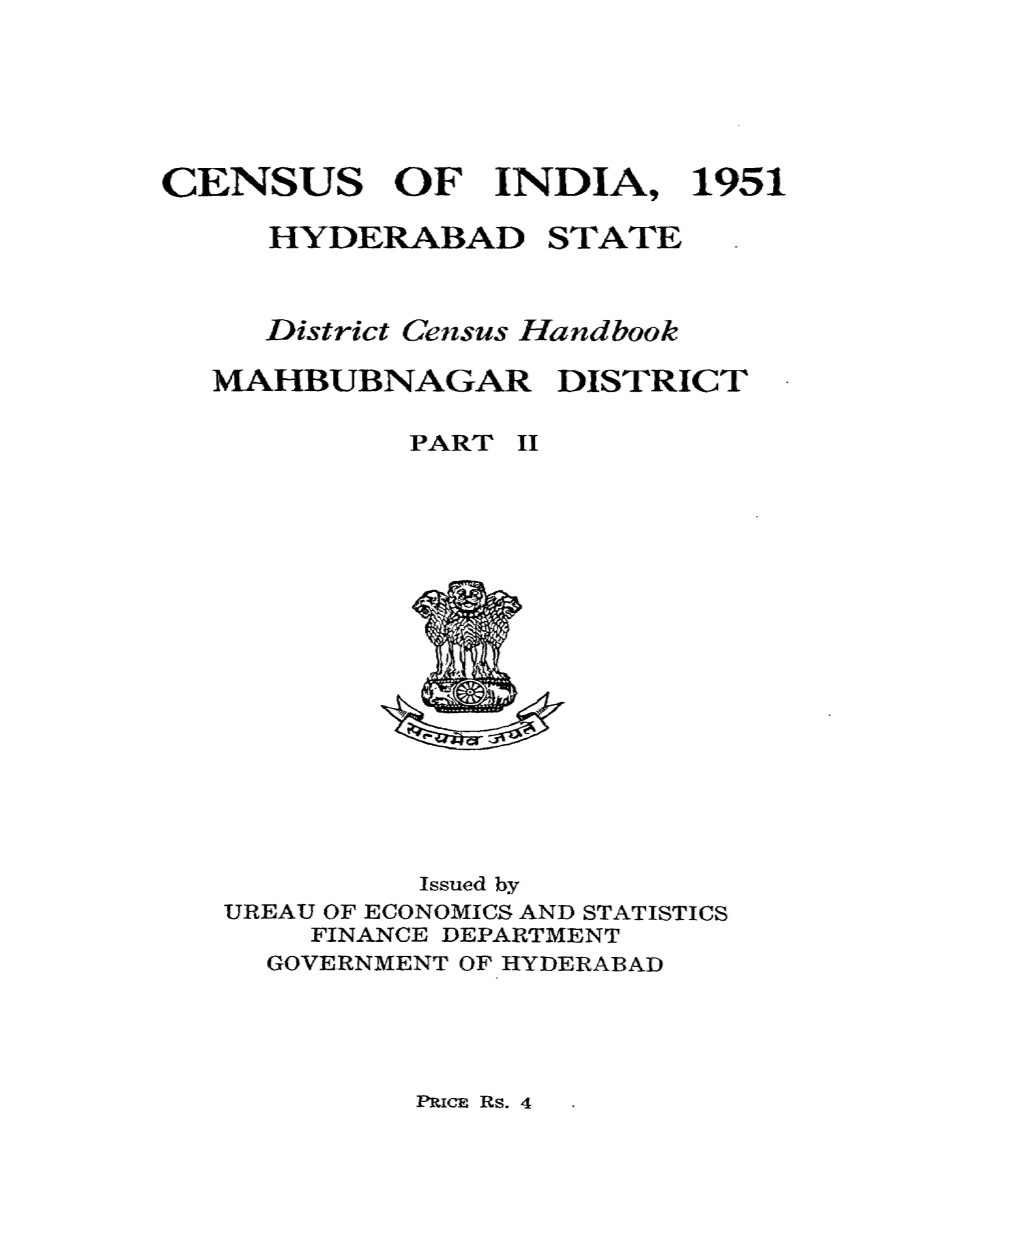 District Census Handbook, Mahbubnagar, Part II